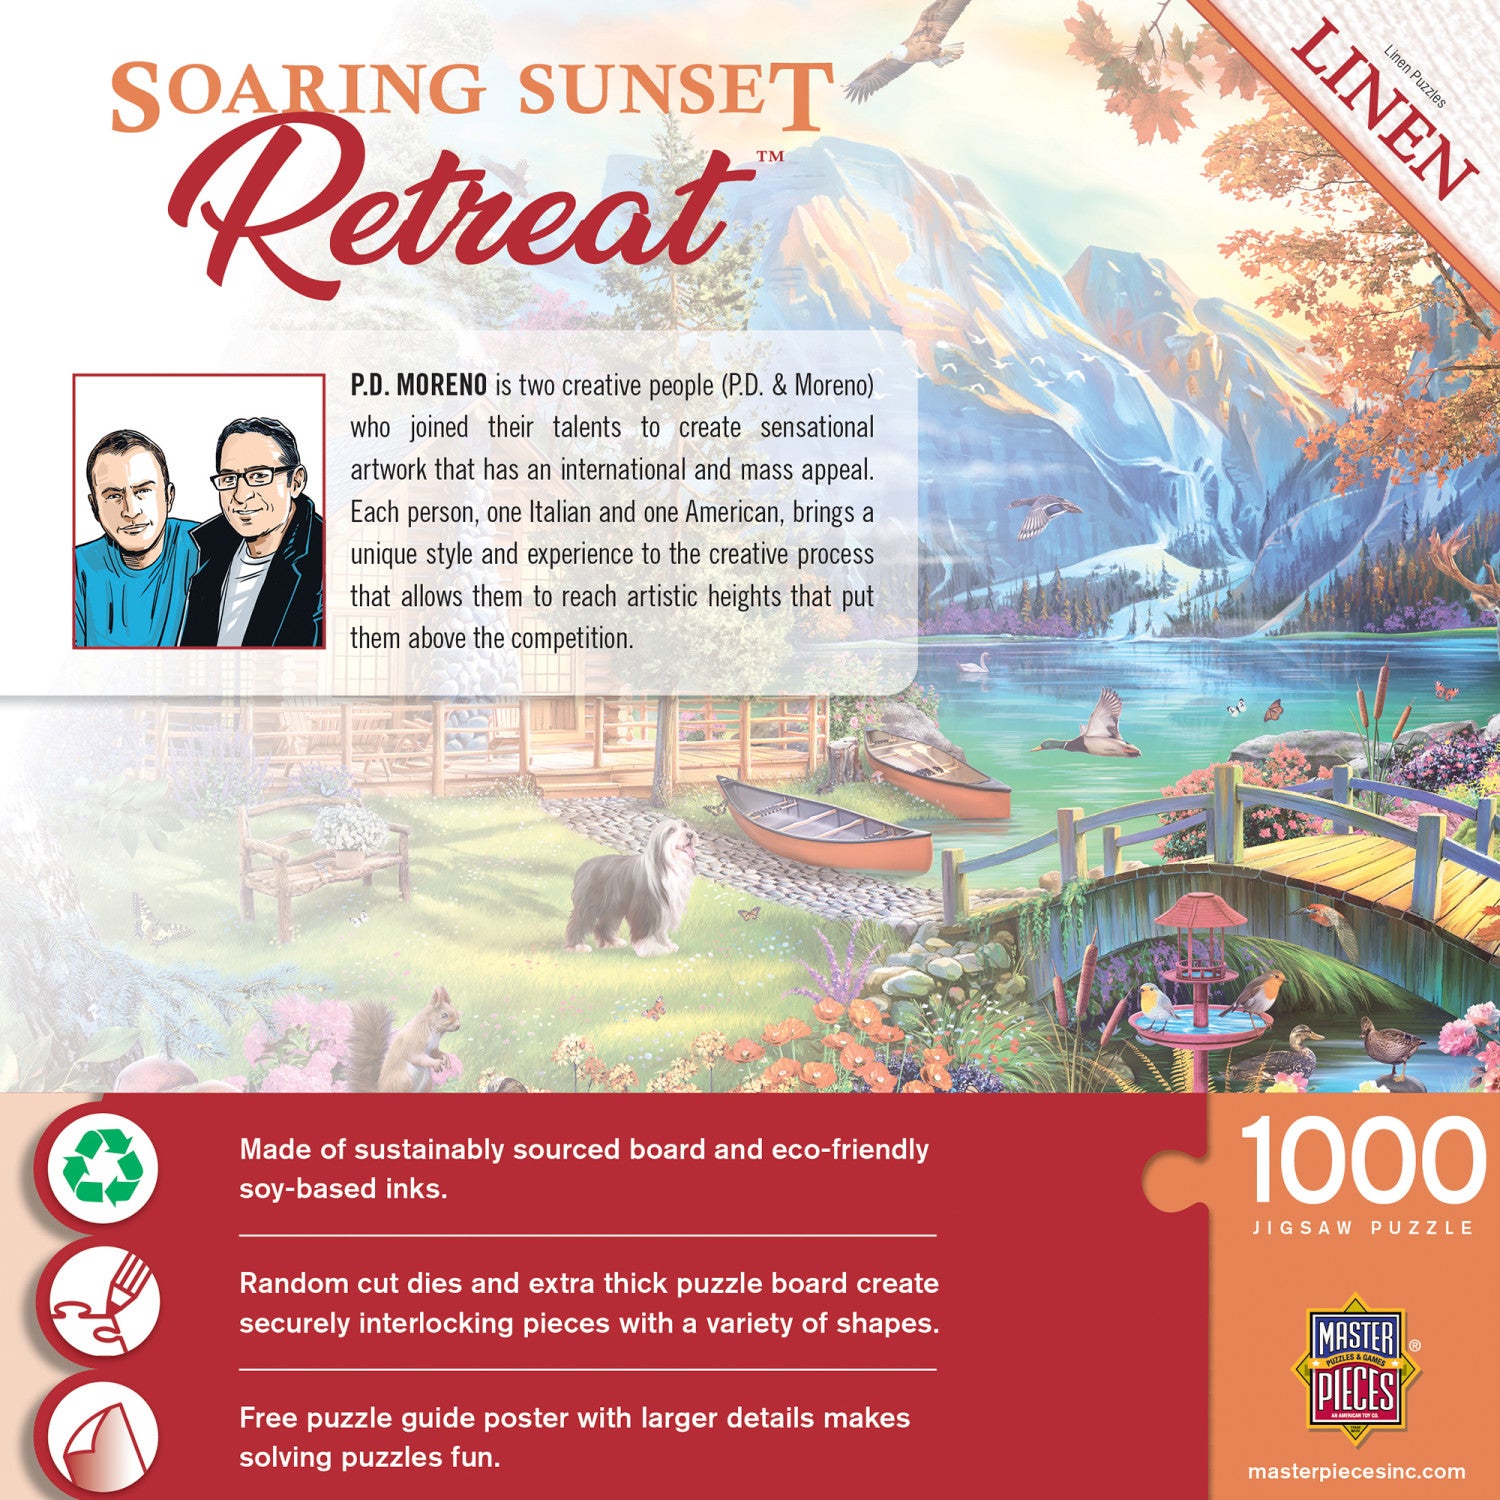 Retreats - Soaring Sunset 1000 Piece Jigsaw Puzzle